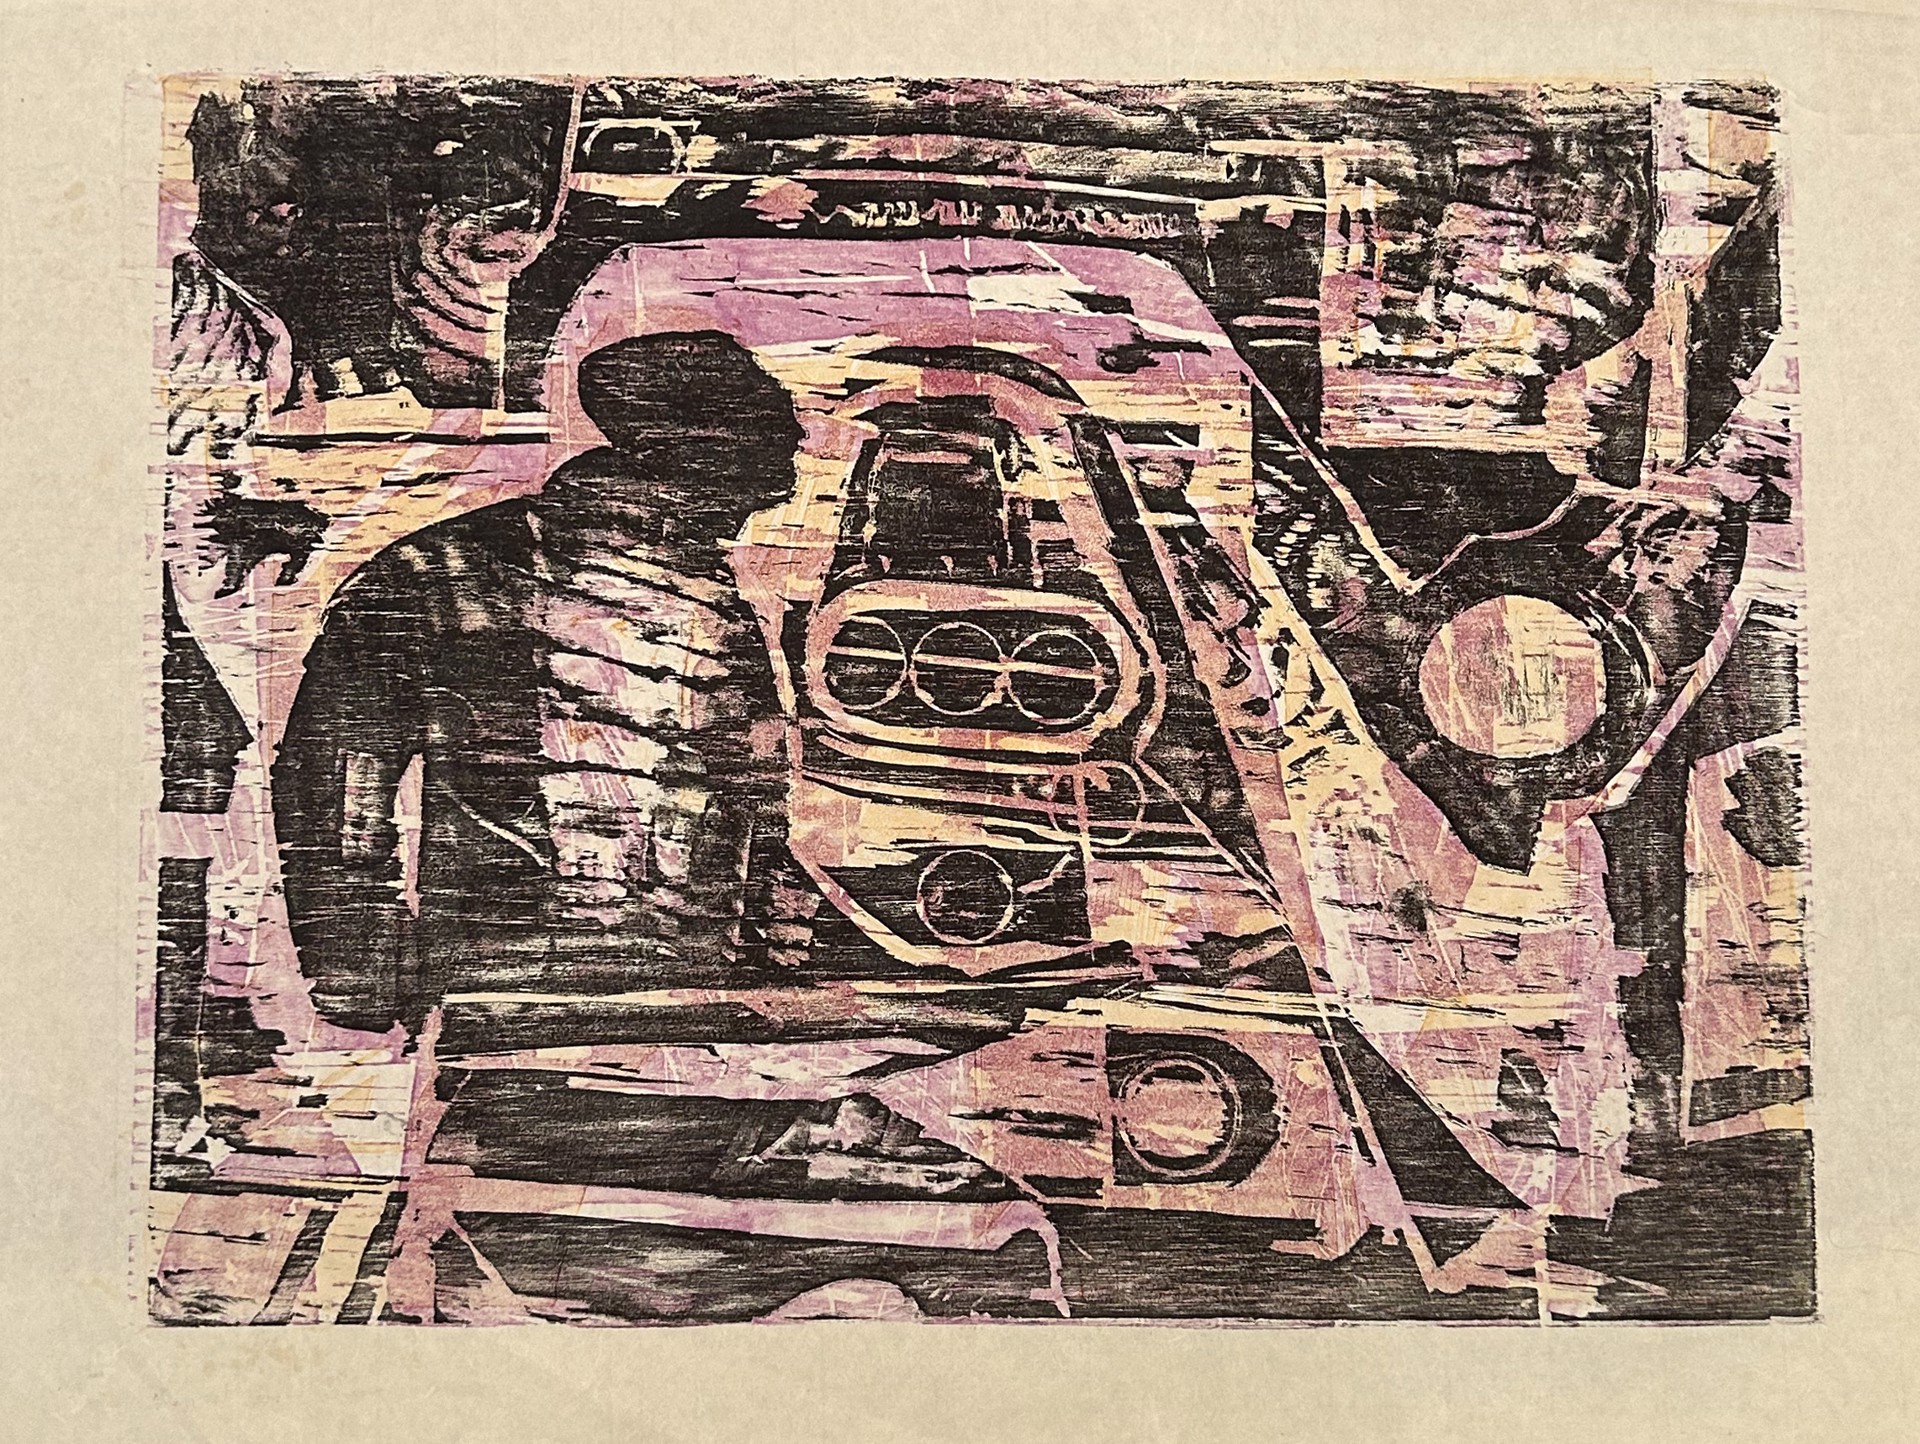 81c3. Machine Shop by Bill Reily - Prints